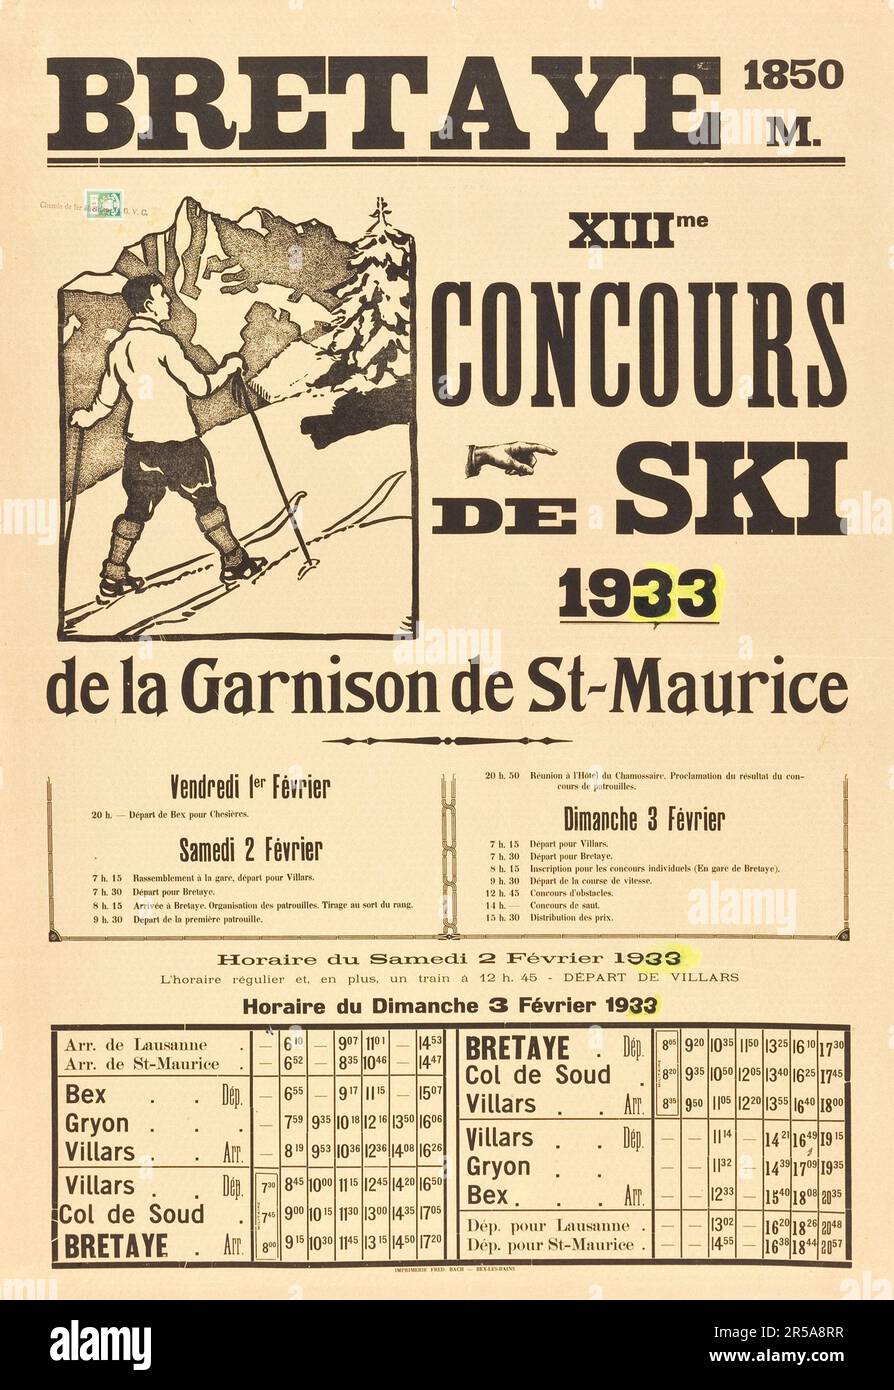 Bretaye, Course defond interclubs - Ski competition. Switzerland Travel Posters (1933) Unknown artist. Stock Photo